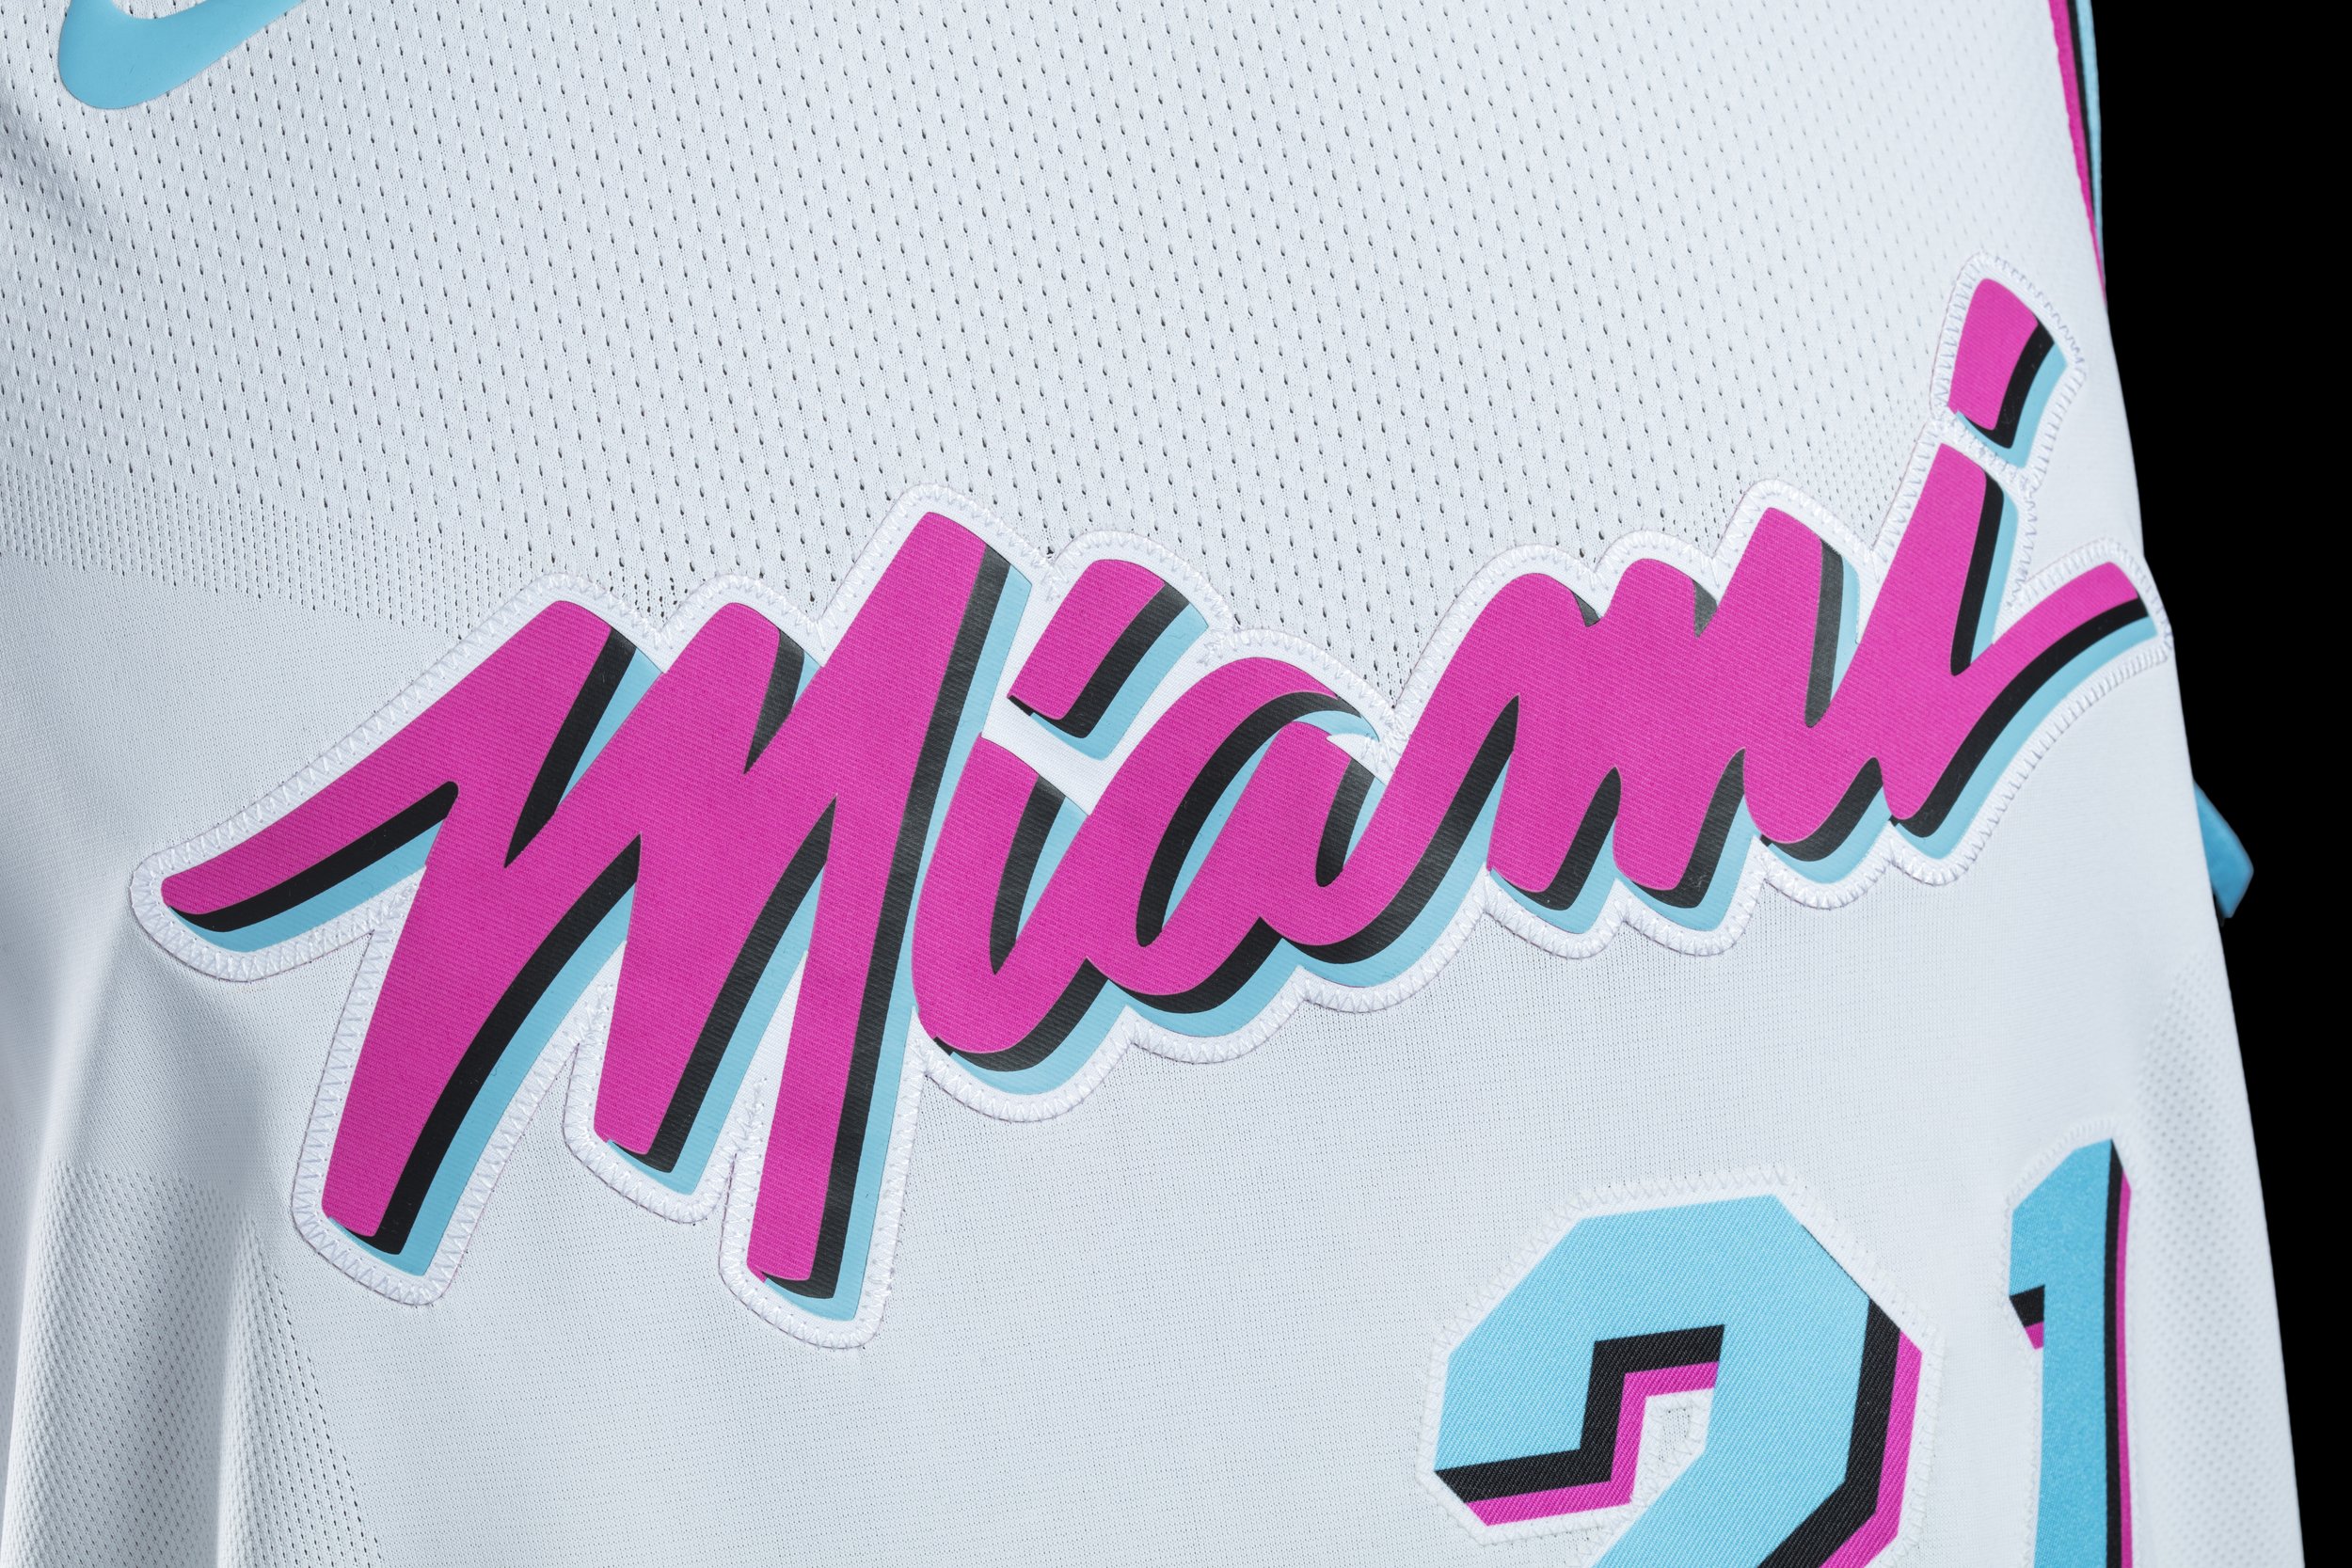 Miami Heat releases newest uniform 'Miami Mashup